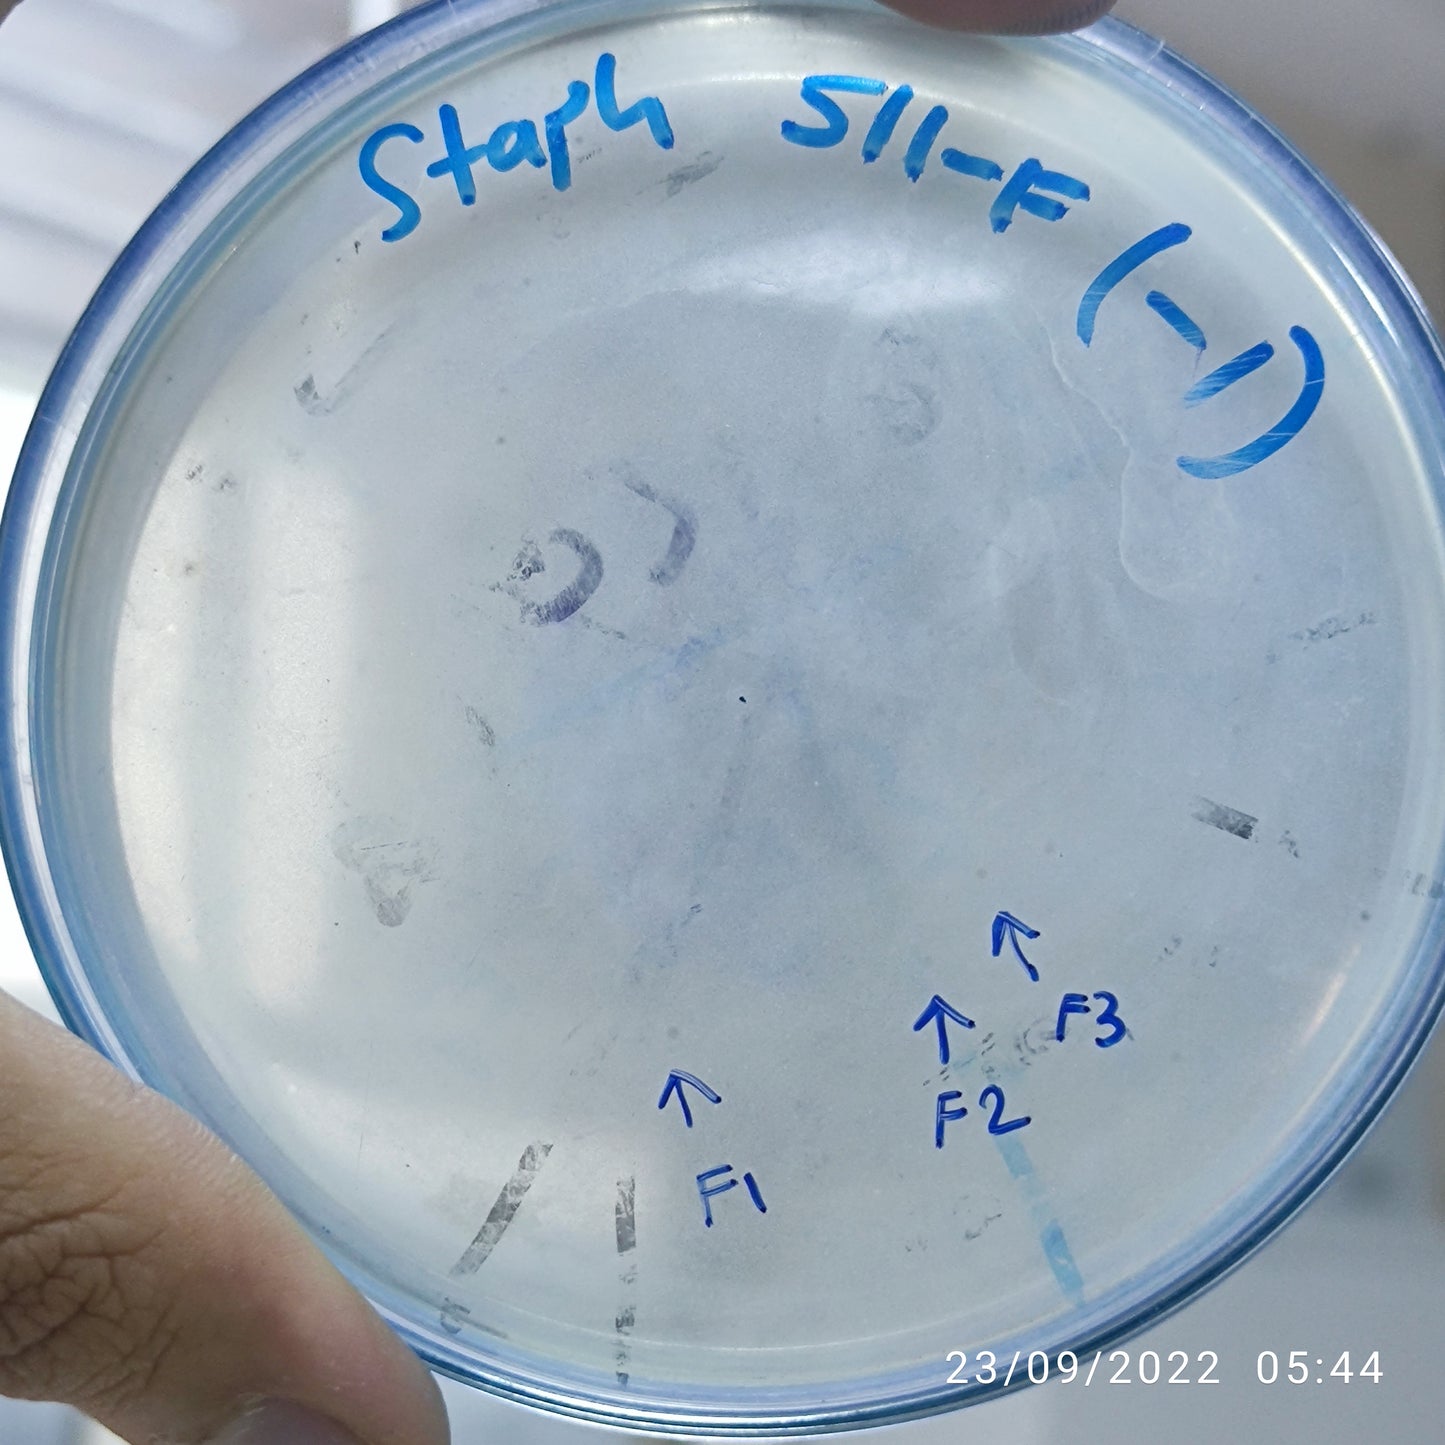 Staphylococcus aureus bacteriophage 152511F